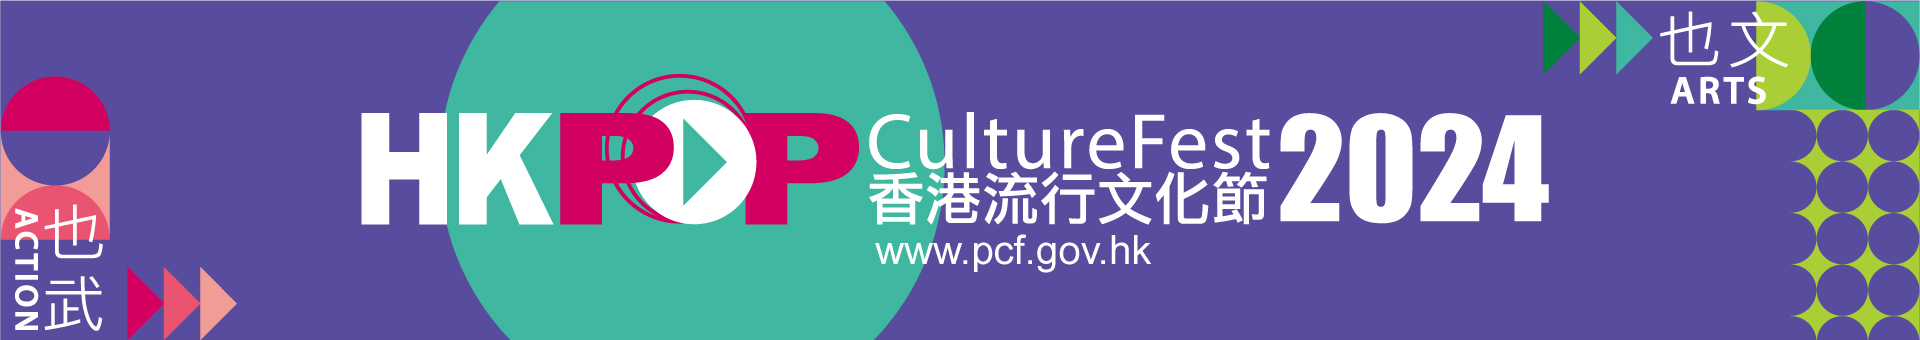 Hong Kong Pop Culture Festival 2024